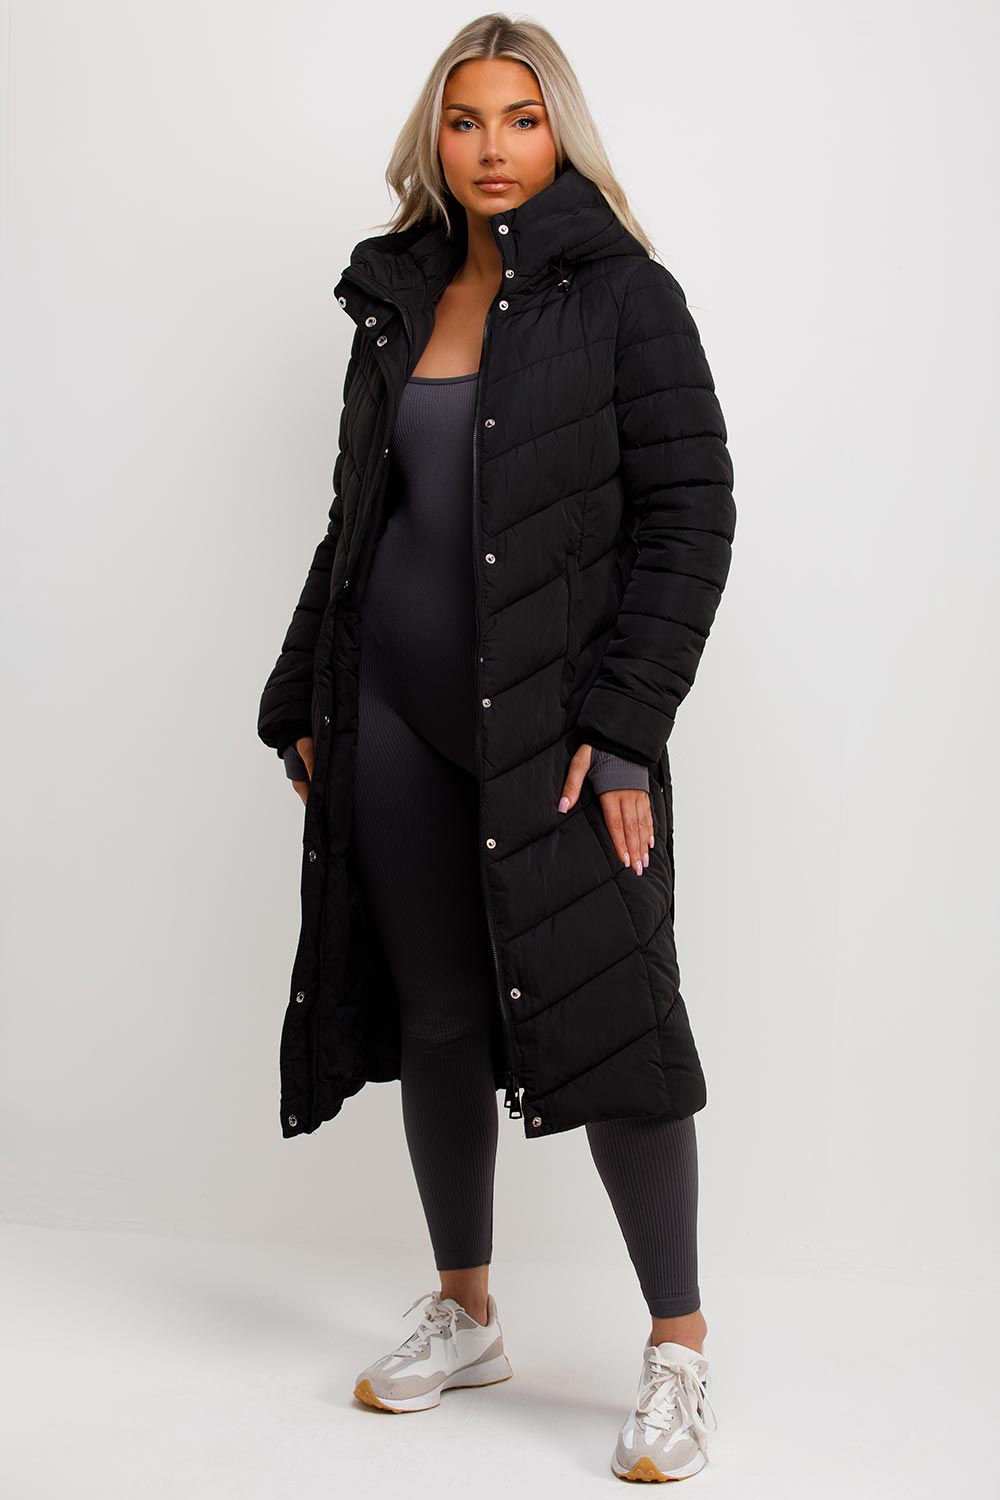 Women's Puffer Jackets Long Gilets Faux Fur Coats Body Warmers –